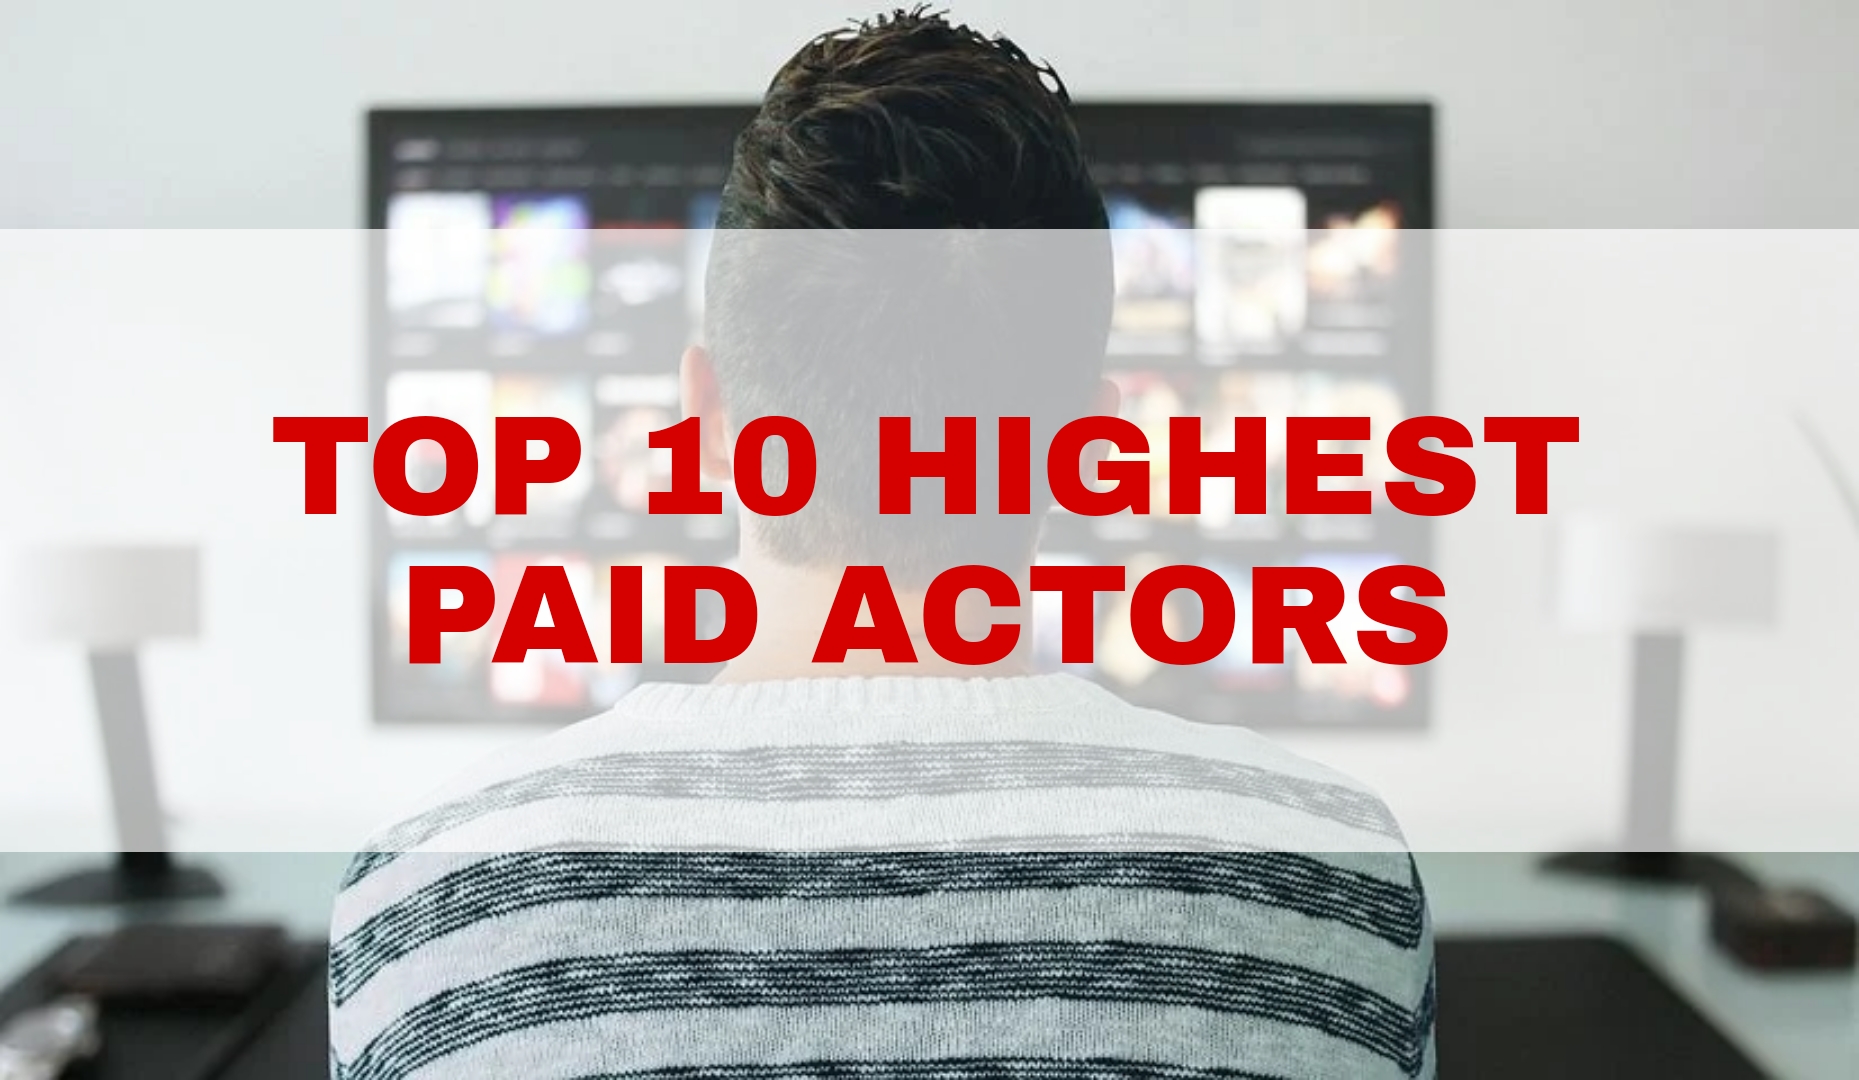 Top 10 Highest Paid Actors in 2022